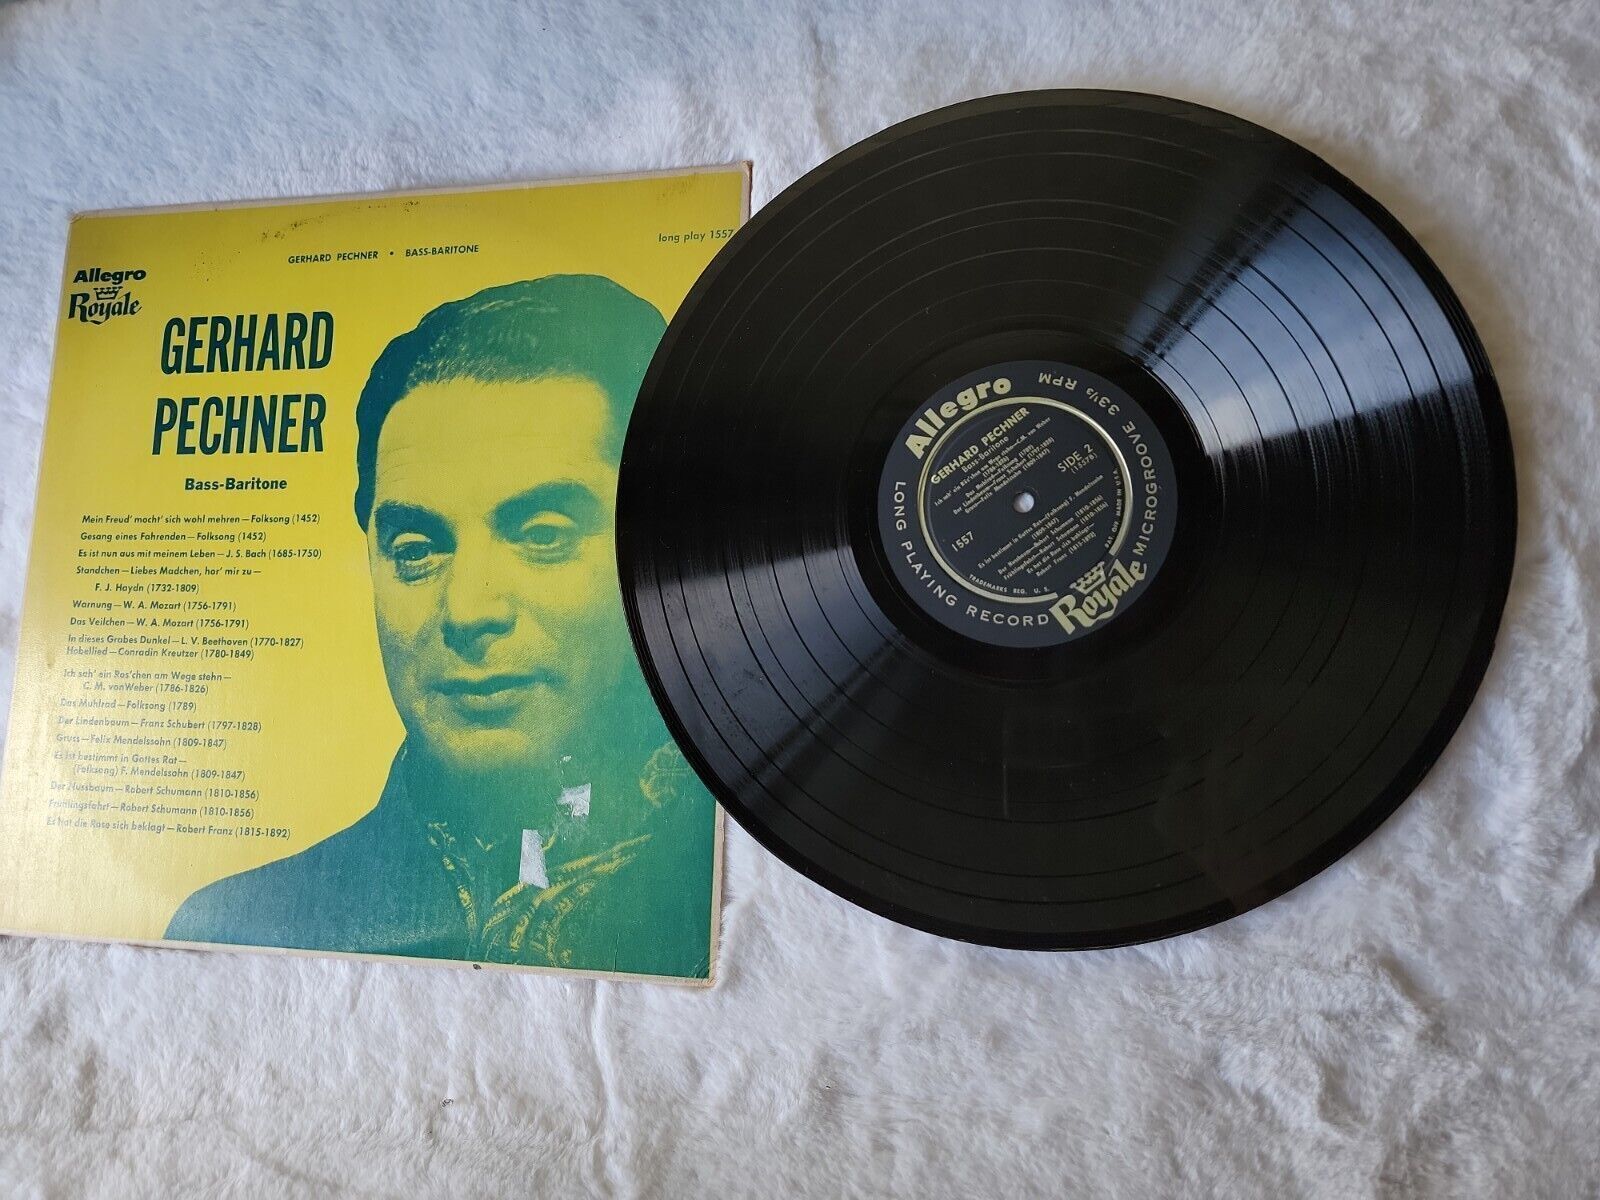 Gerhard Pechner - Bass-Baritone - Allegro Royale LP MONO